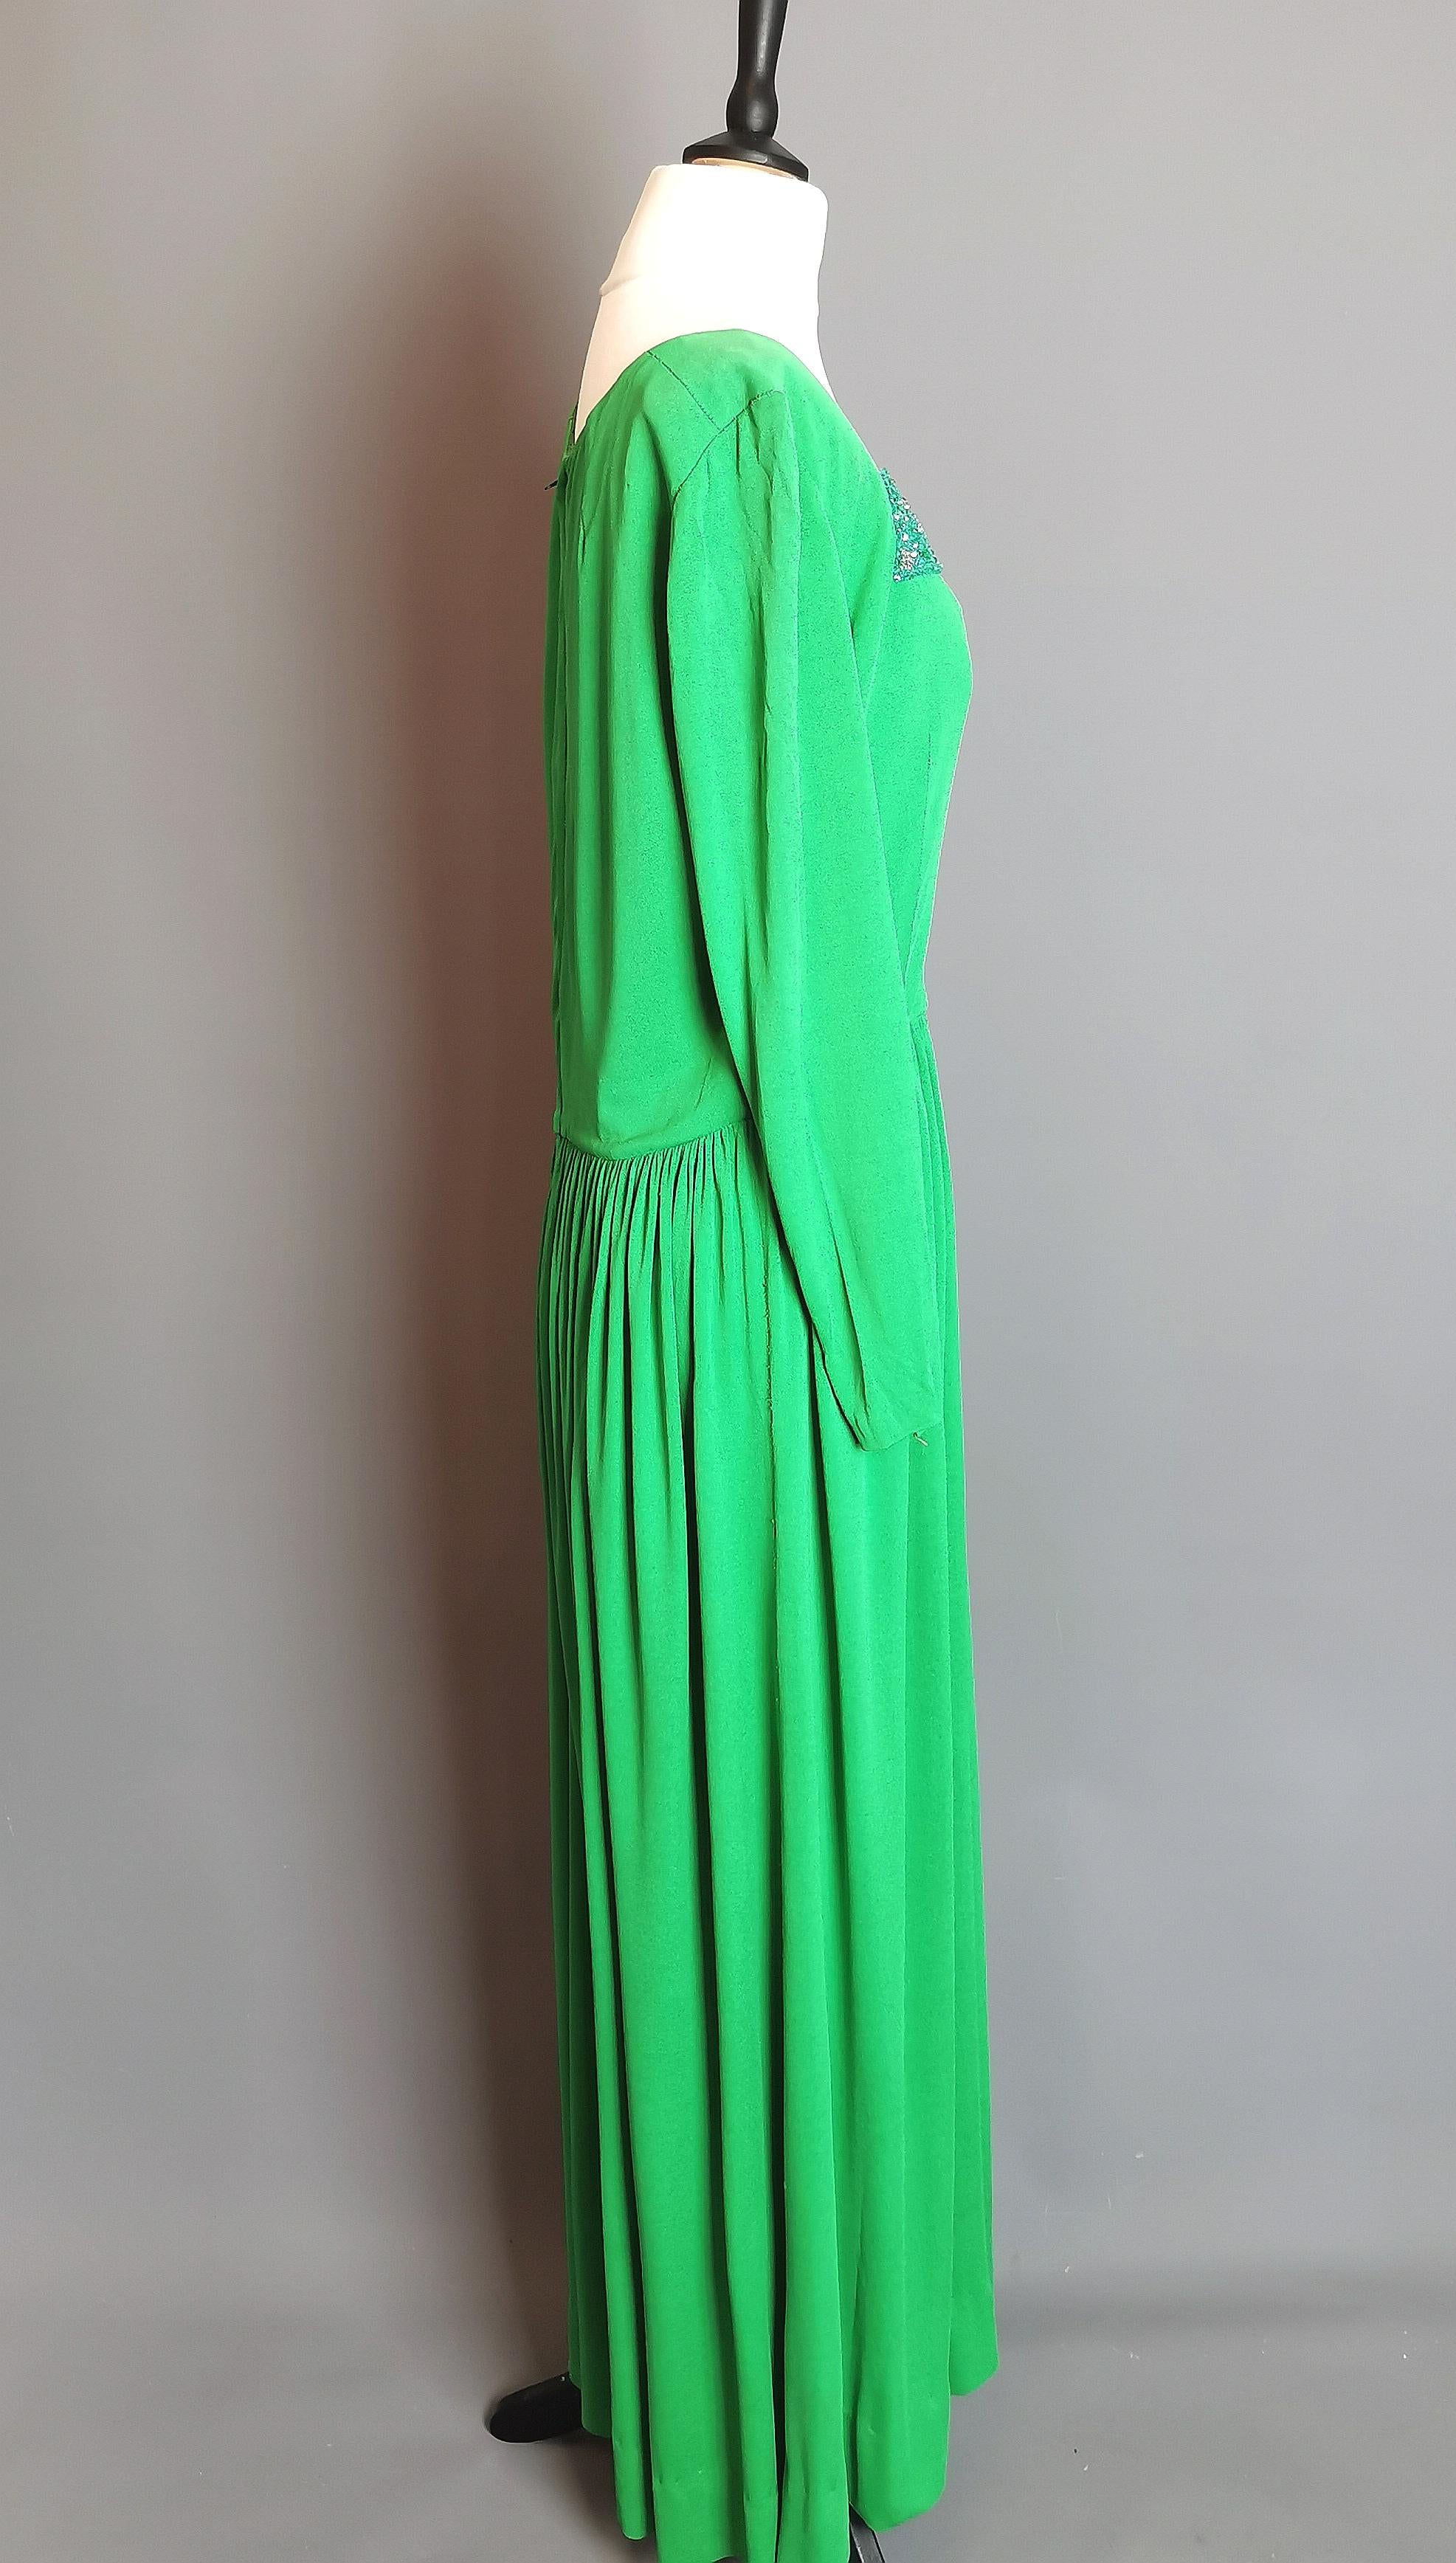 Vintage 1960s cocktail dress, emerald green 3